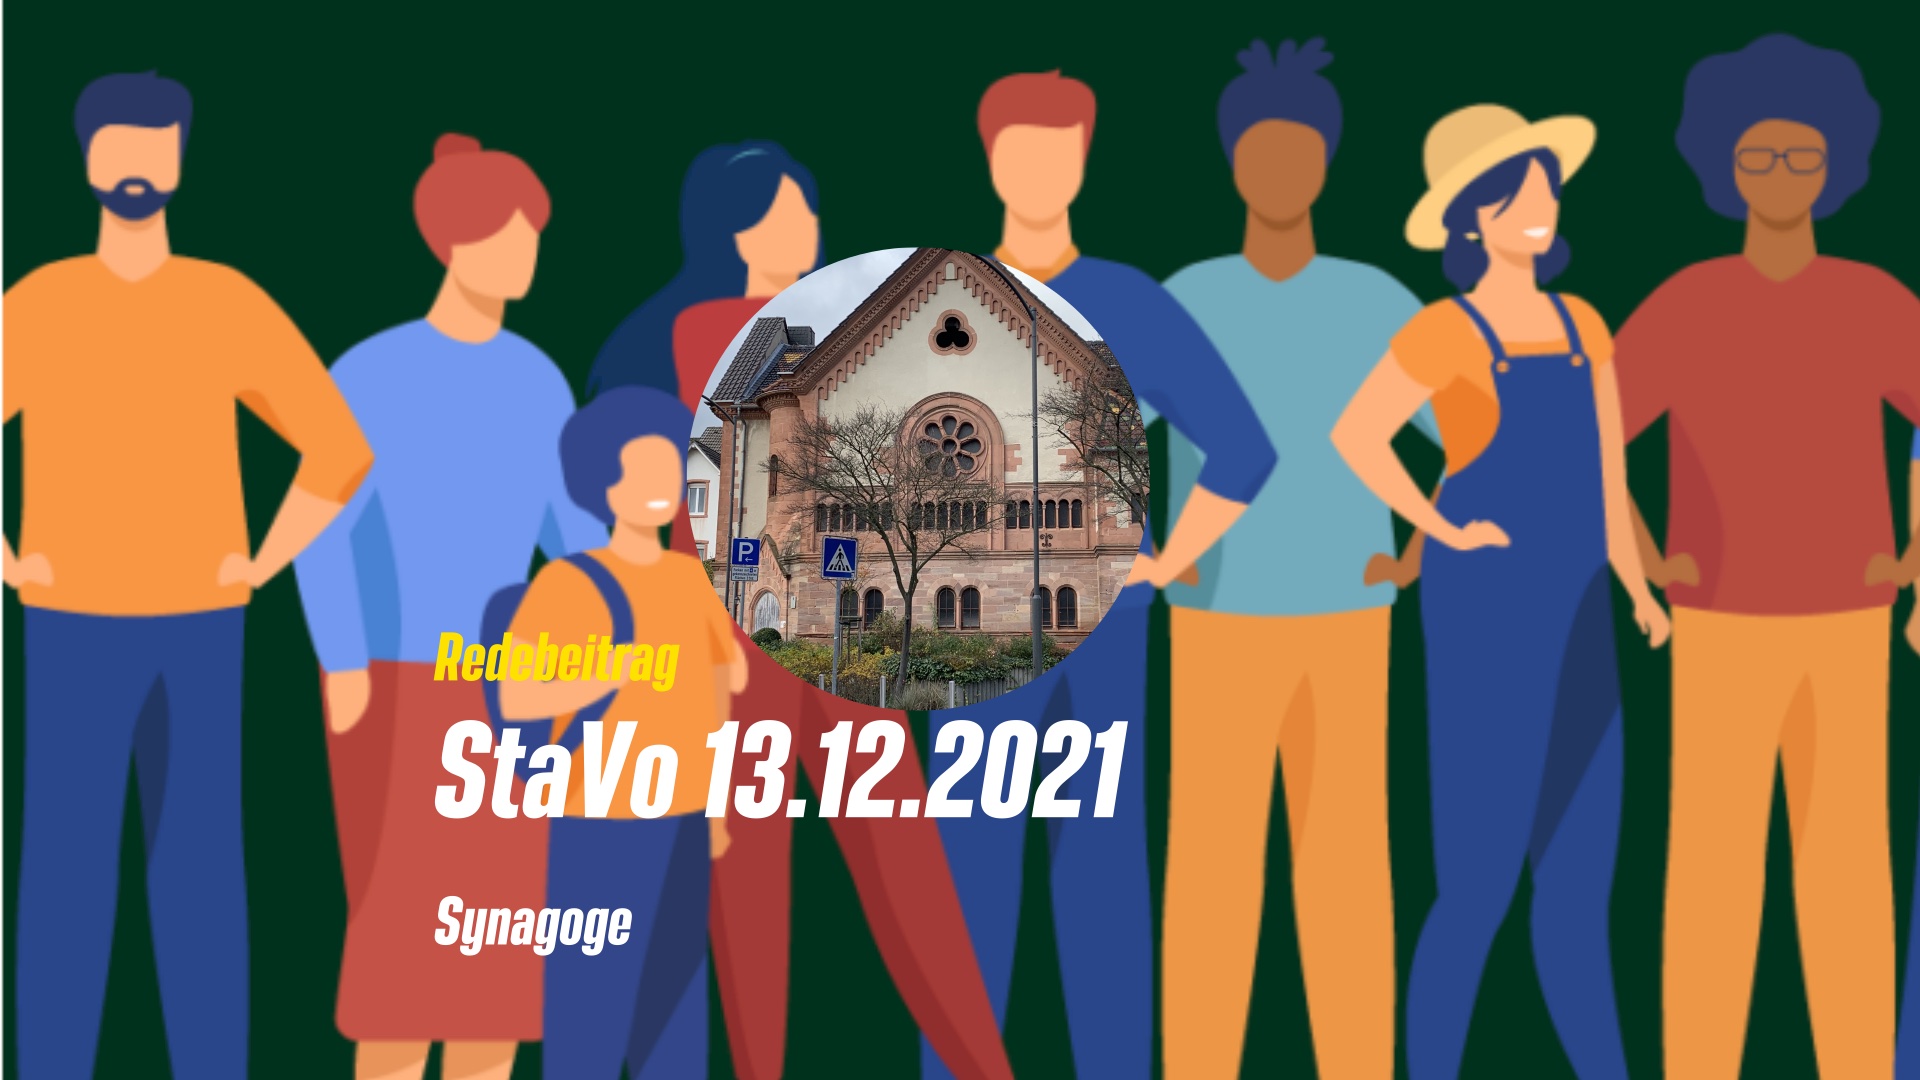 stavo-13-12-20-synagoge _mastodon-sharepic-2